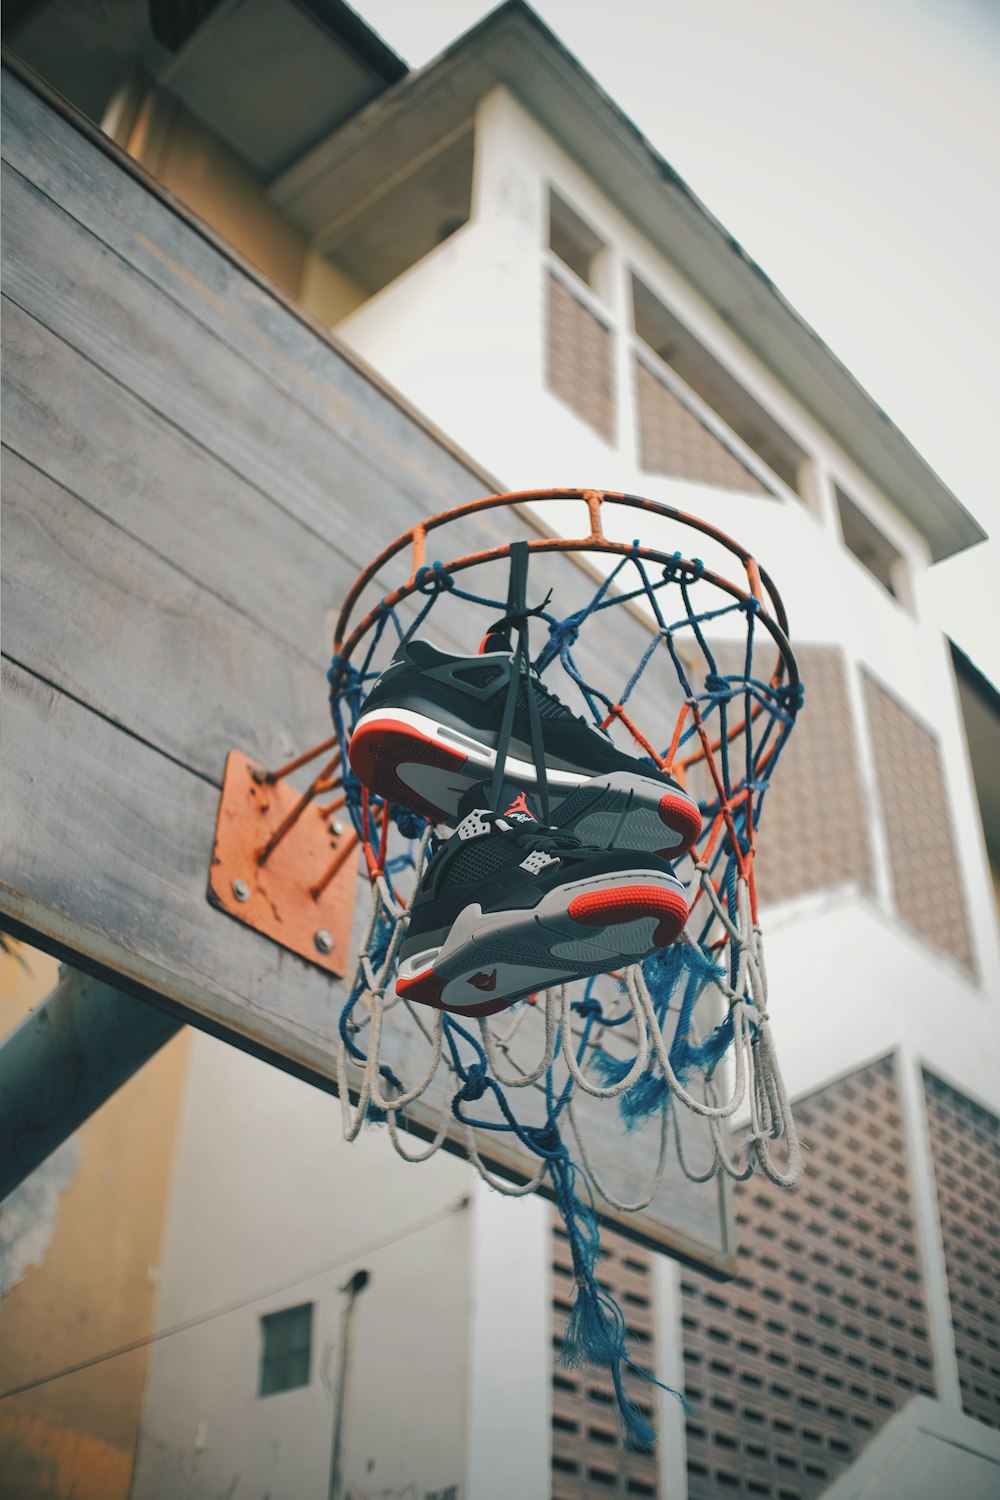 Air Jordan shoes in basketball hoop hanging on net during daytime